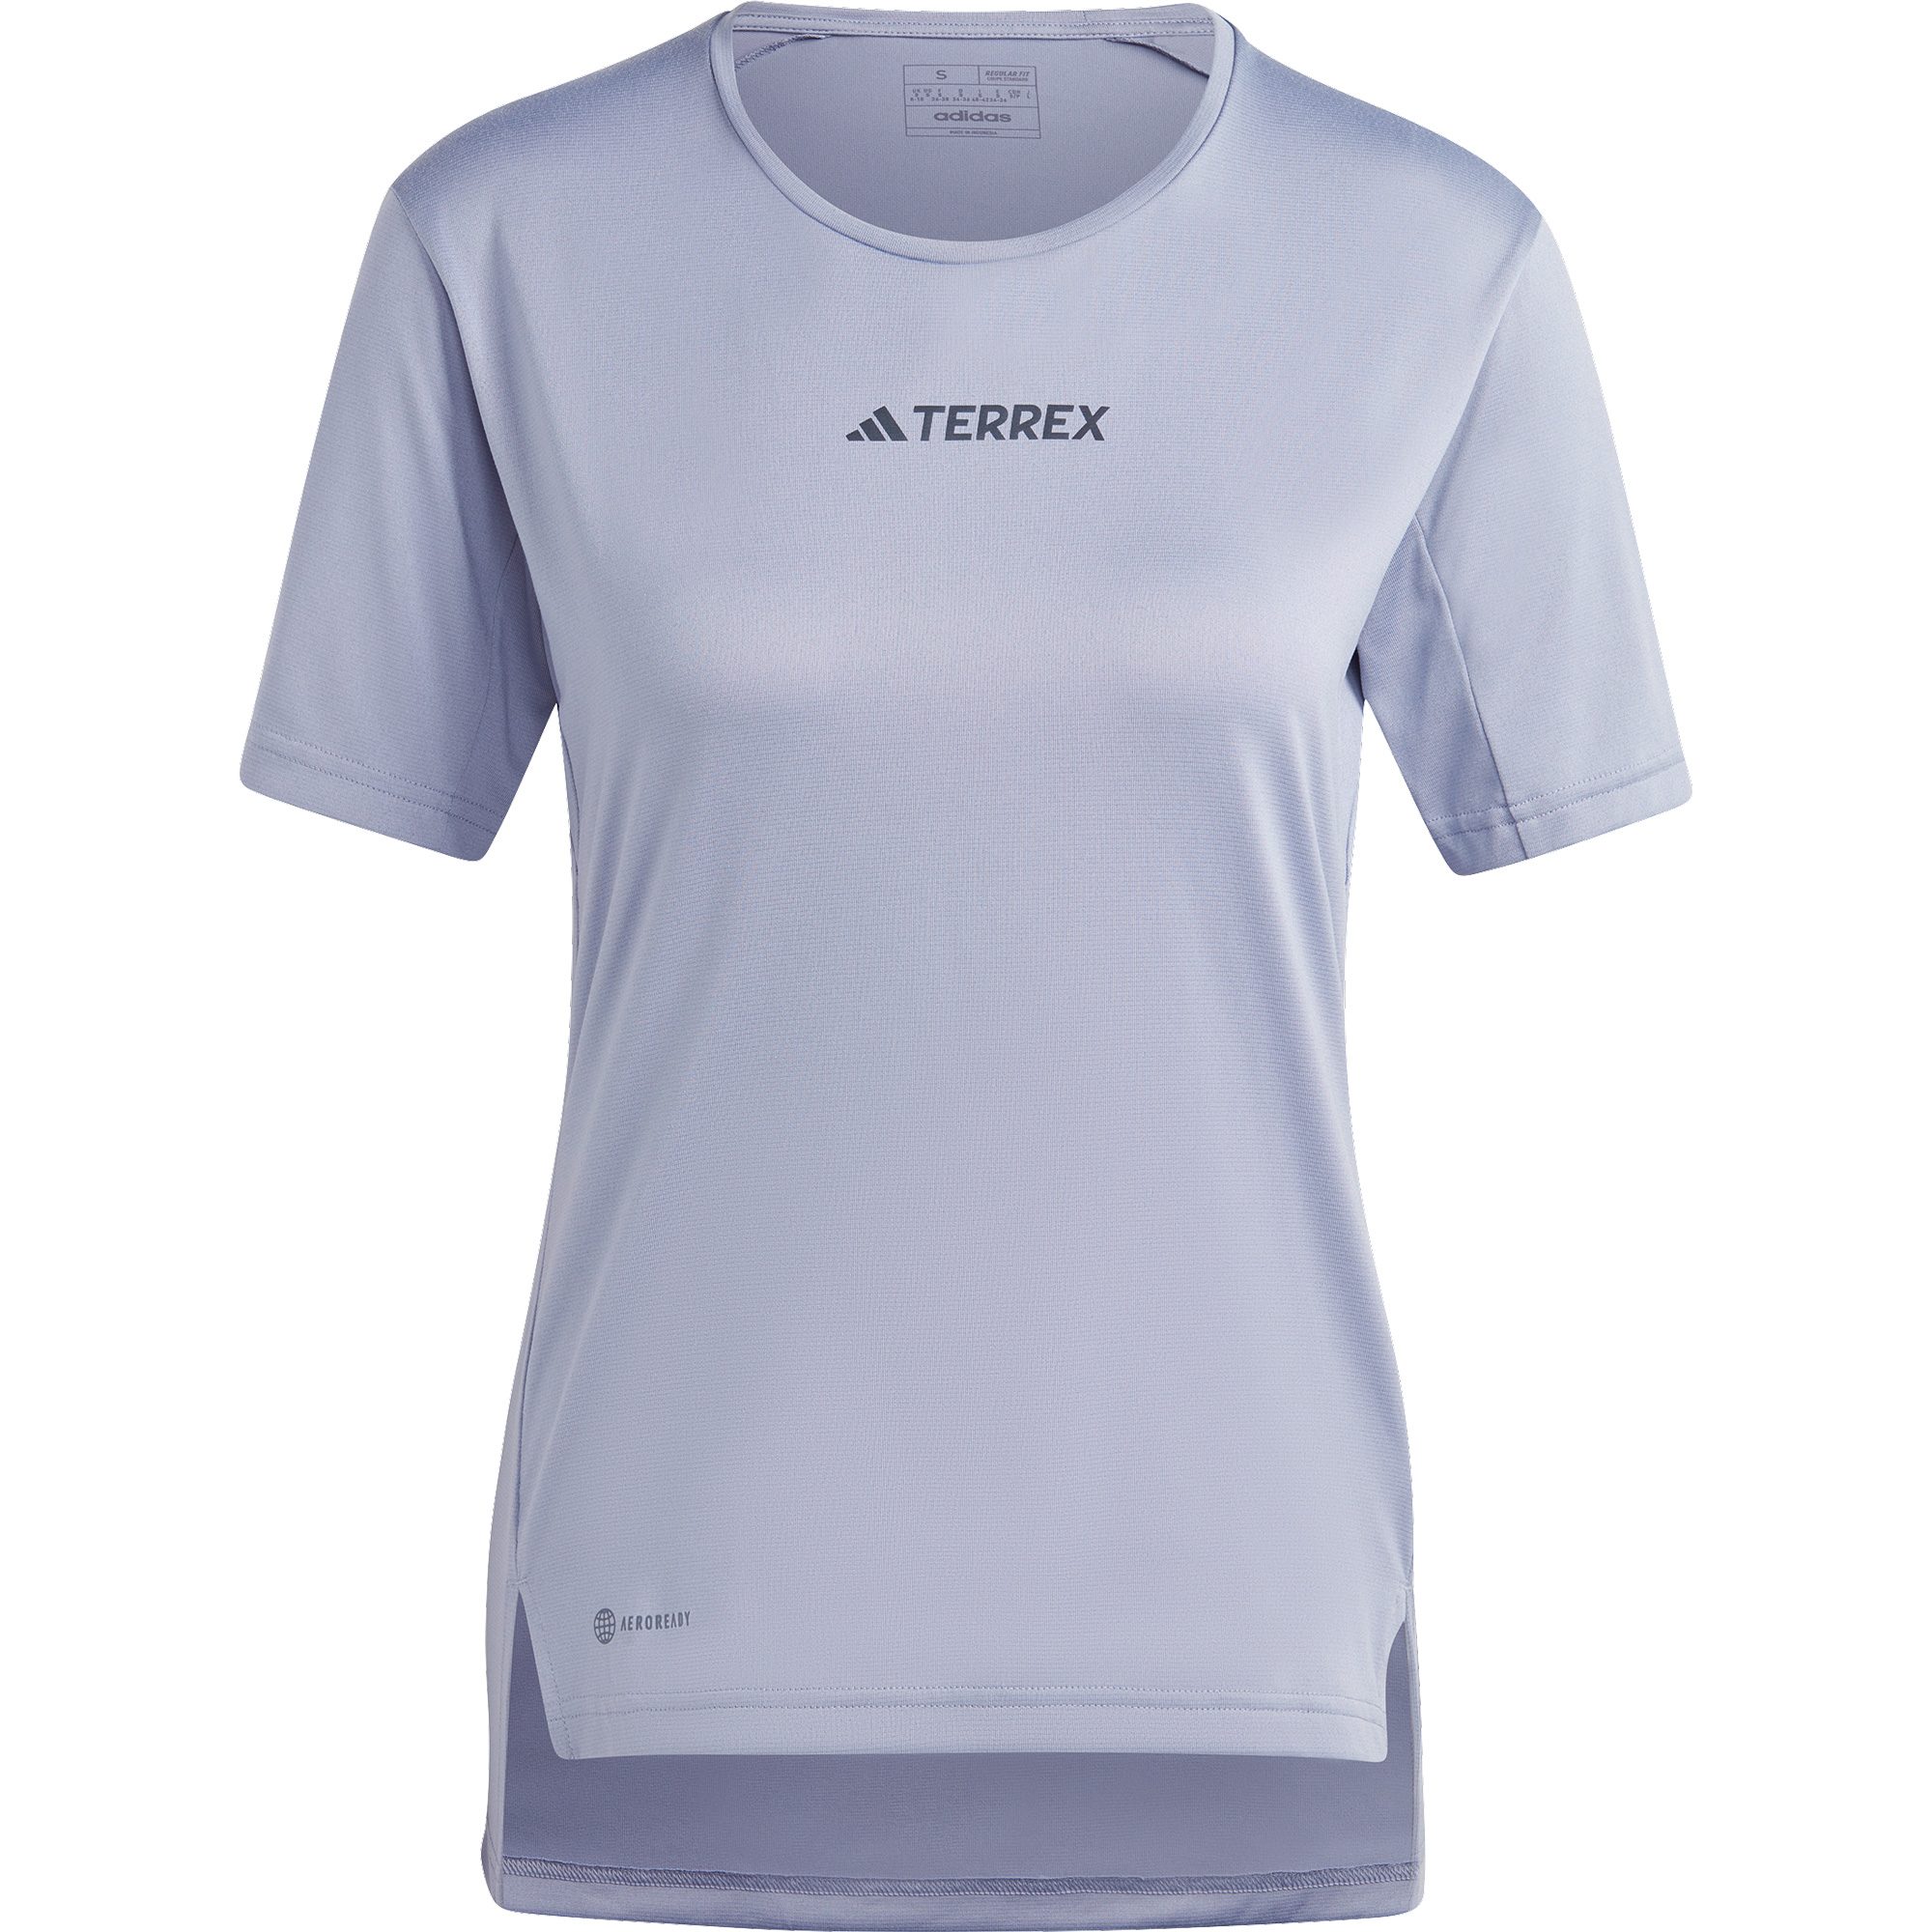 T-Shirt adidas TERREX violet - Terrex silver Women Shop Multi Bittl at Sport